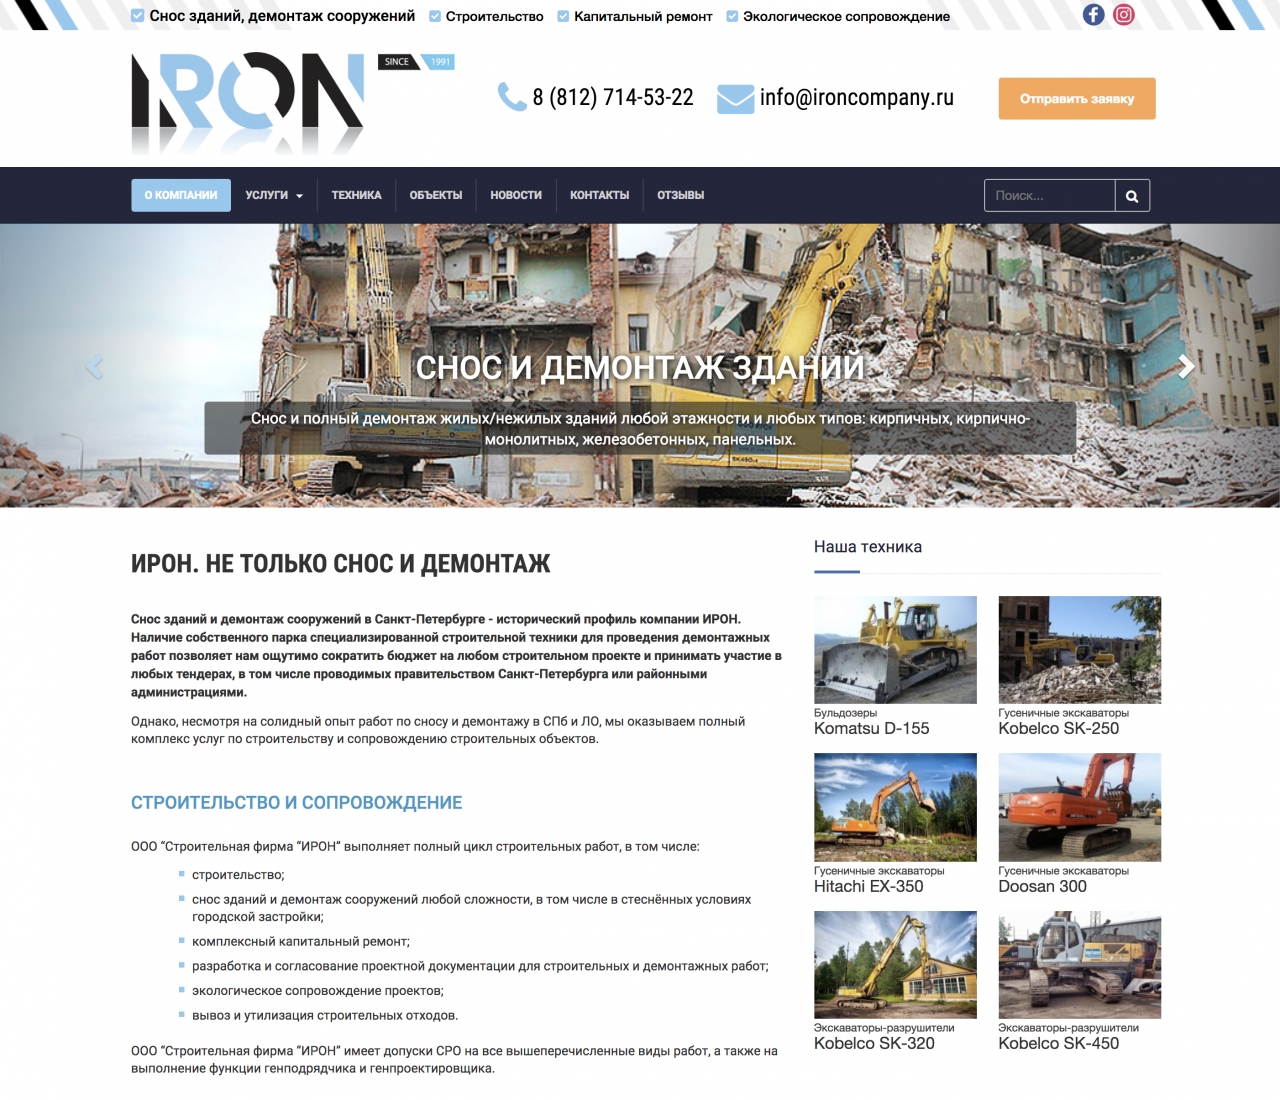 &quot;Iron company&quot; website redesign